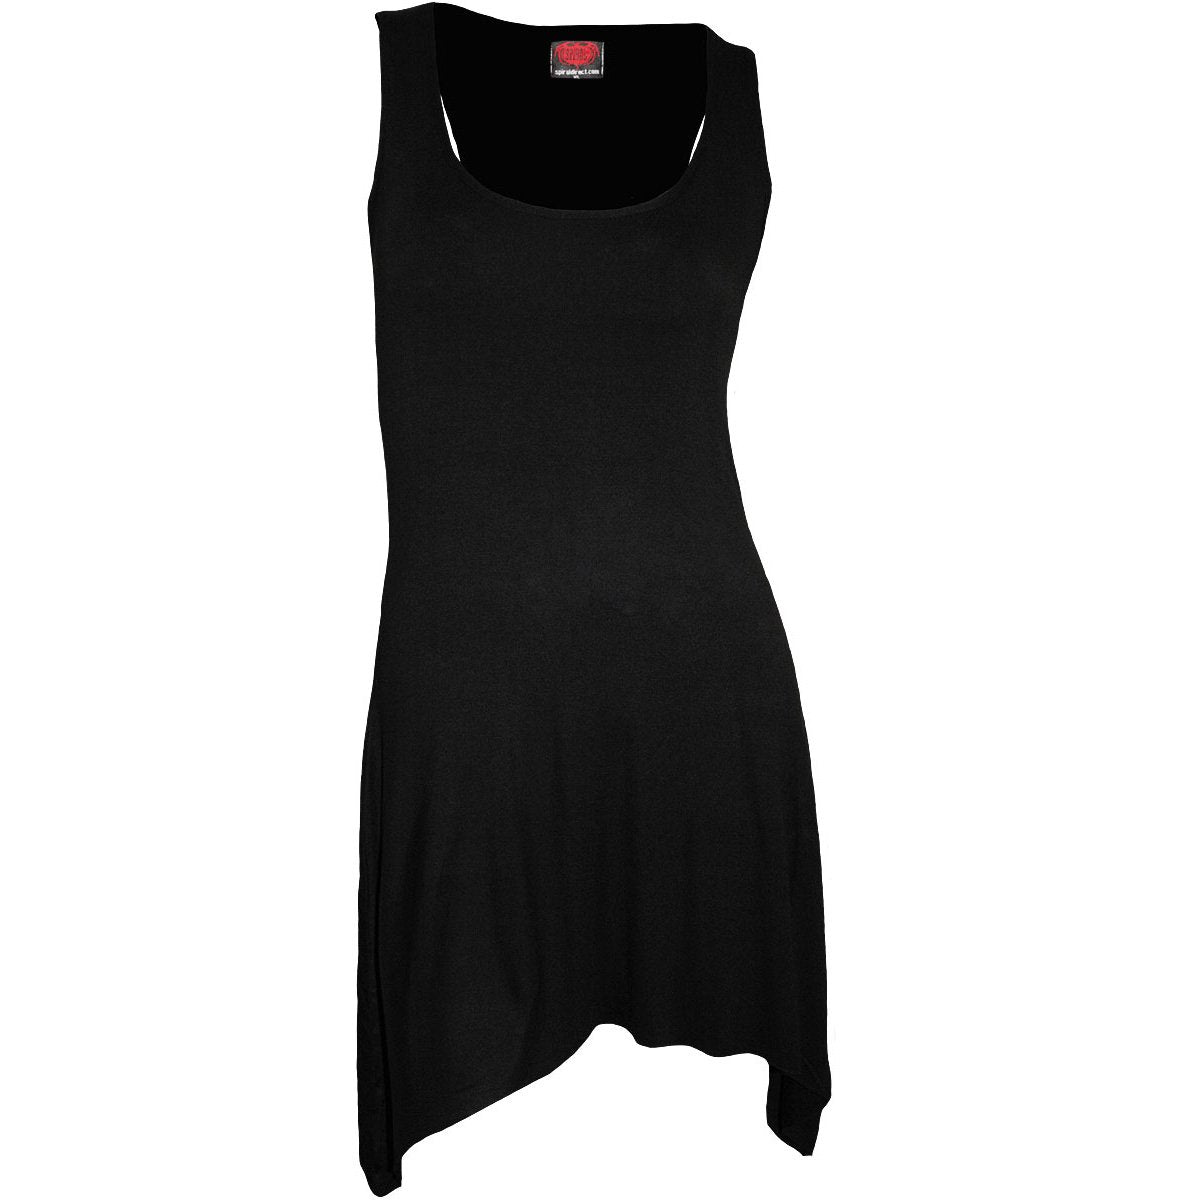 GOTHIC ELEGANCE - Goth Bottom Camisole Dress Black - Spiral USA